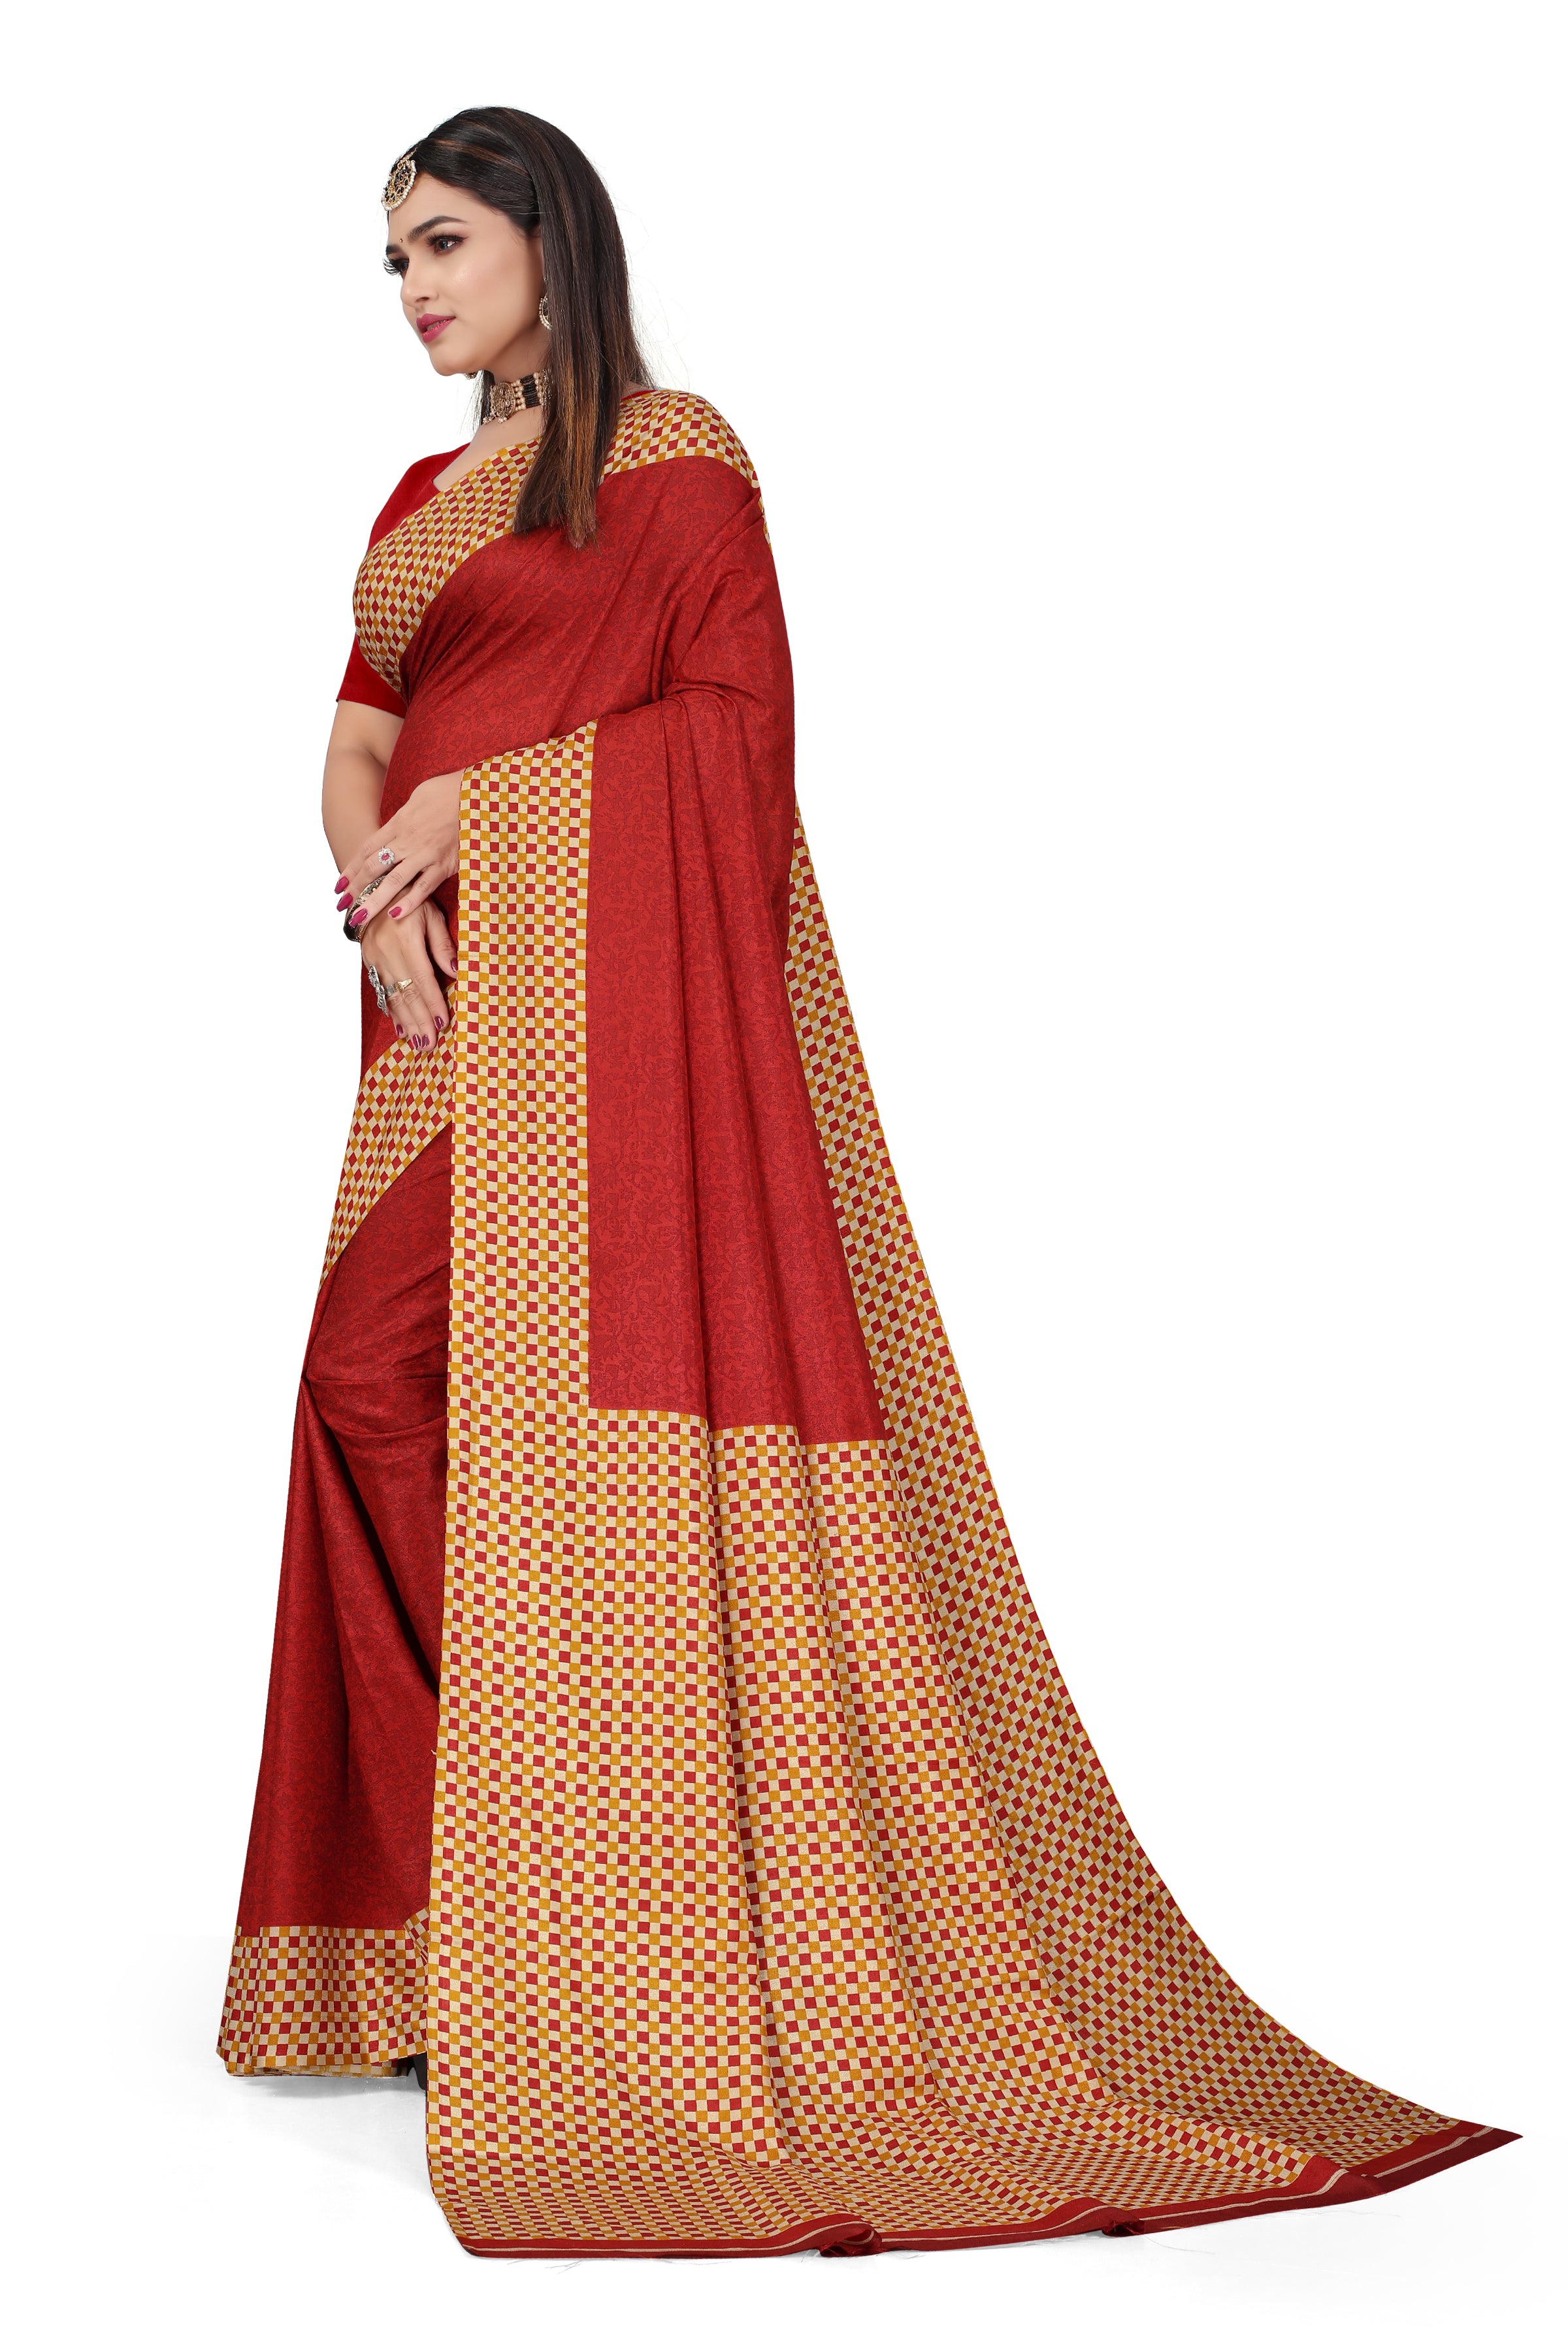 Vimla Prints Women's Red Malgudi Art Silk Uniform Saree with Blouse Piece (2450_24)